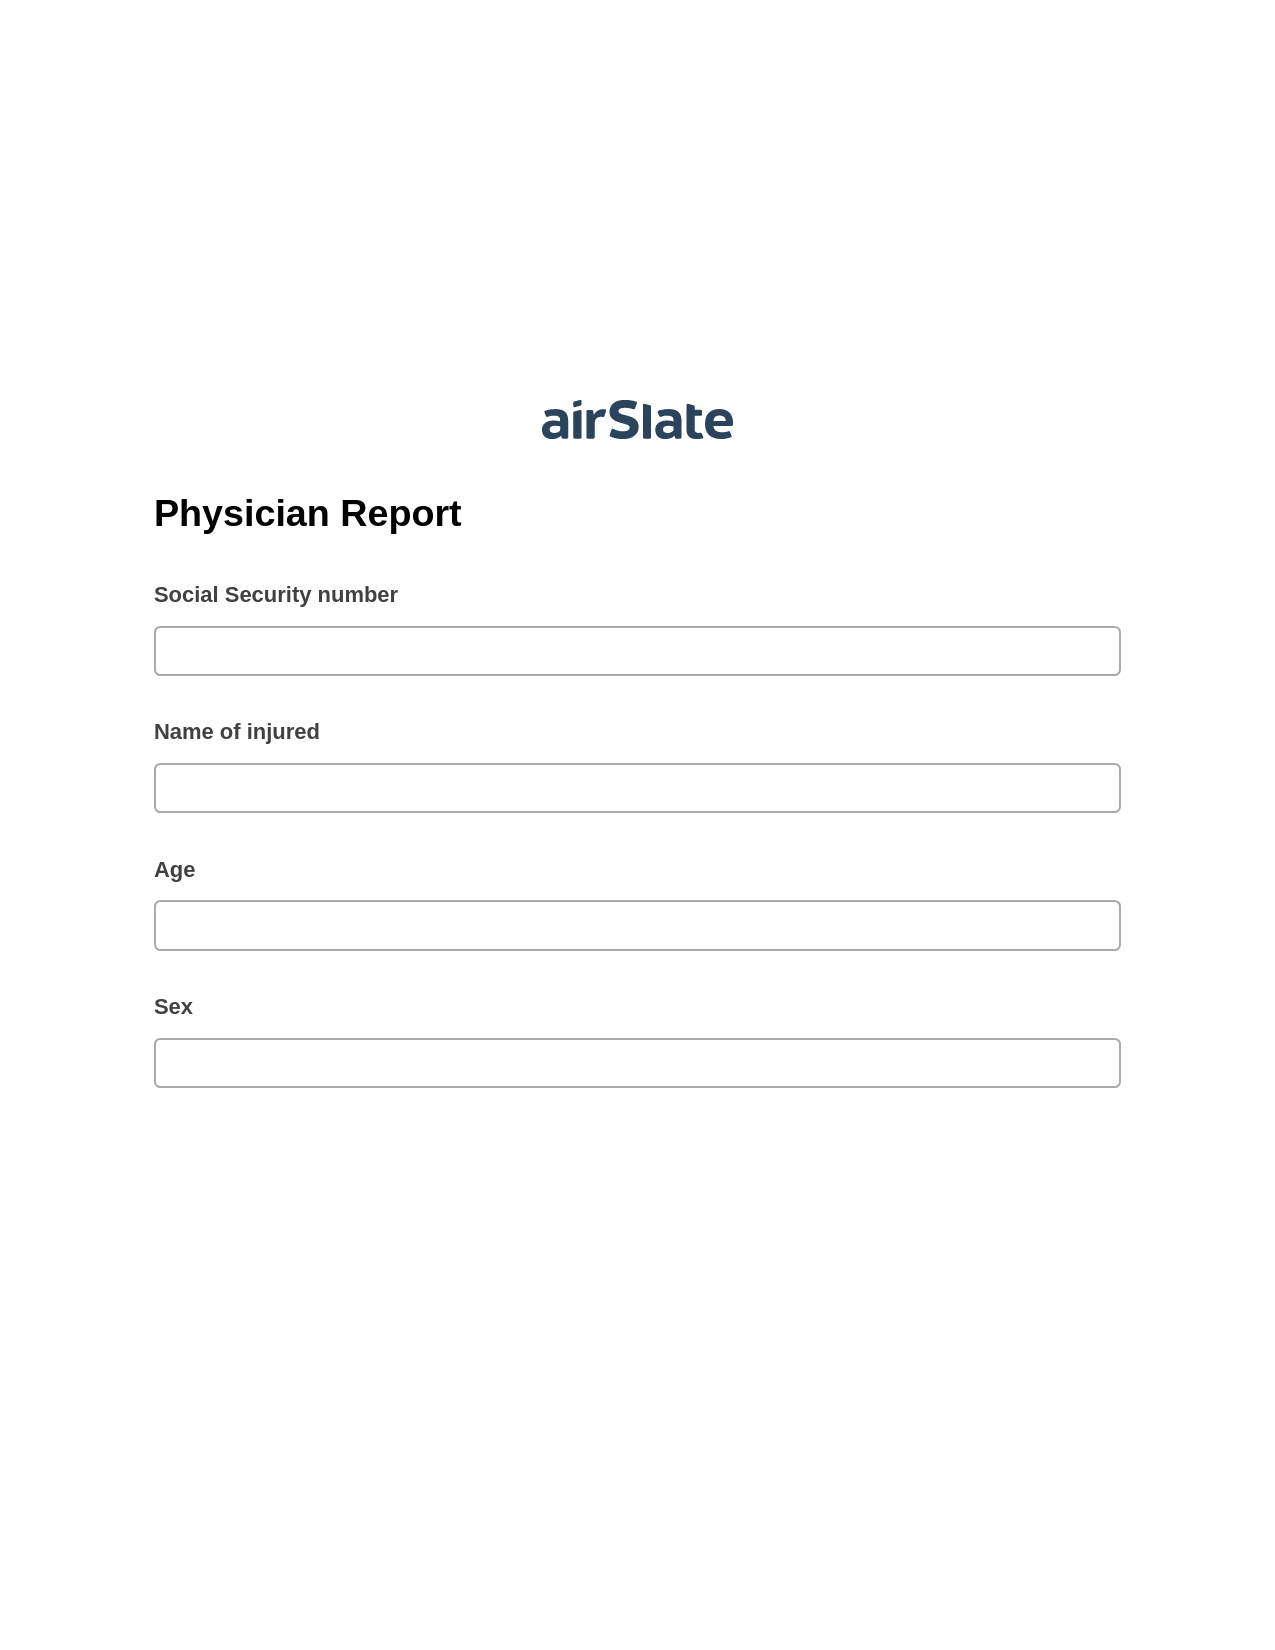 Physician Report Pre-fill Dropdowns from MySQL Bot, Jira Bot, Post-finish Document Bot